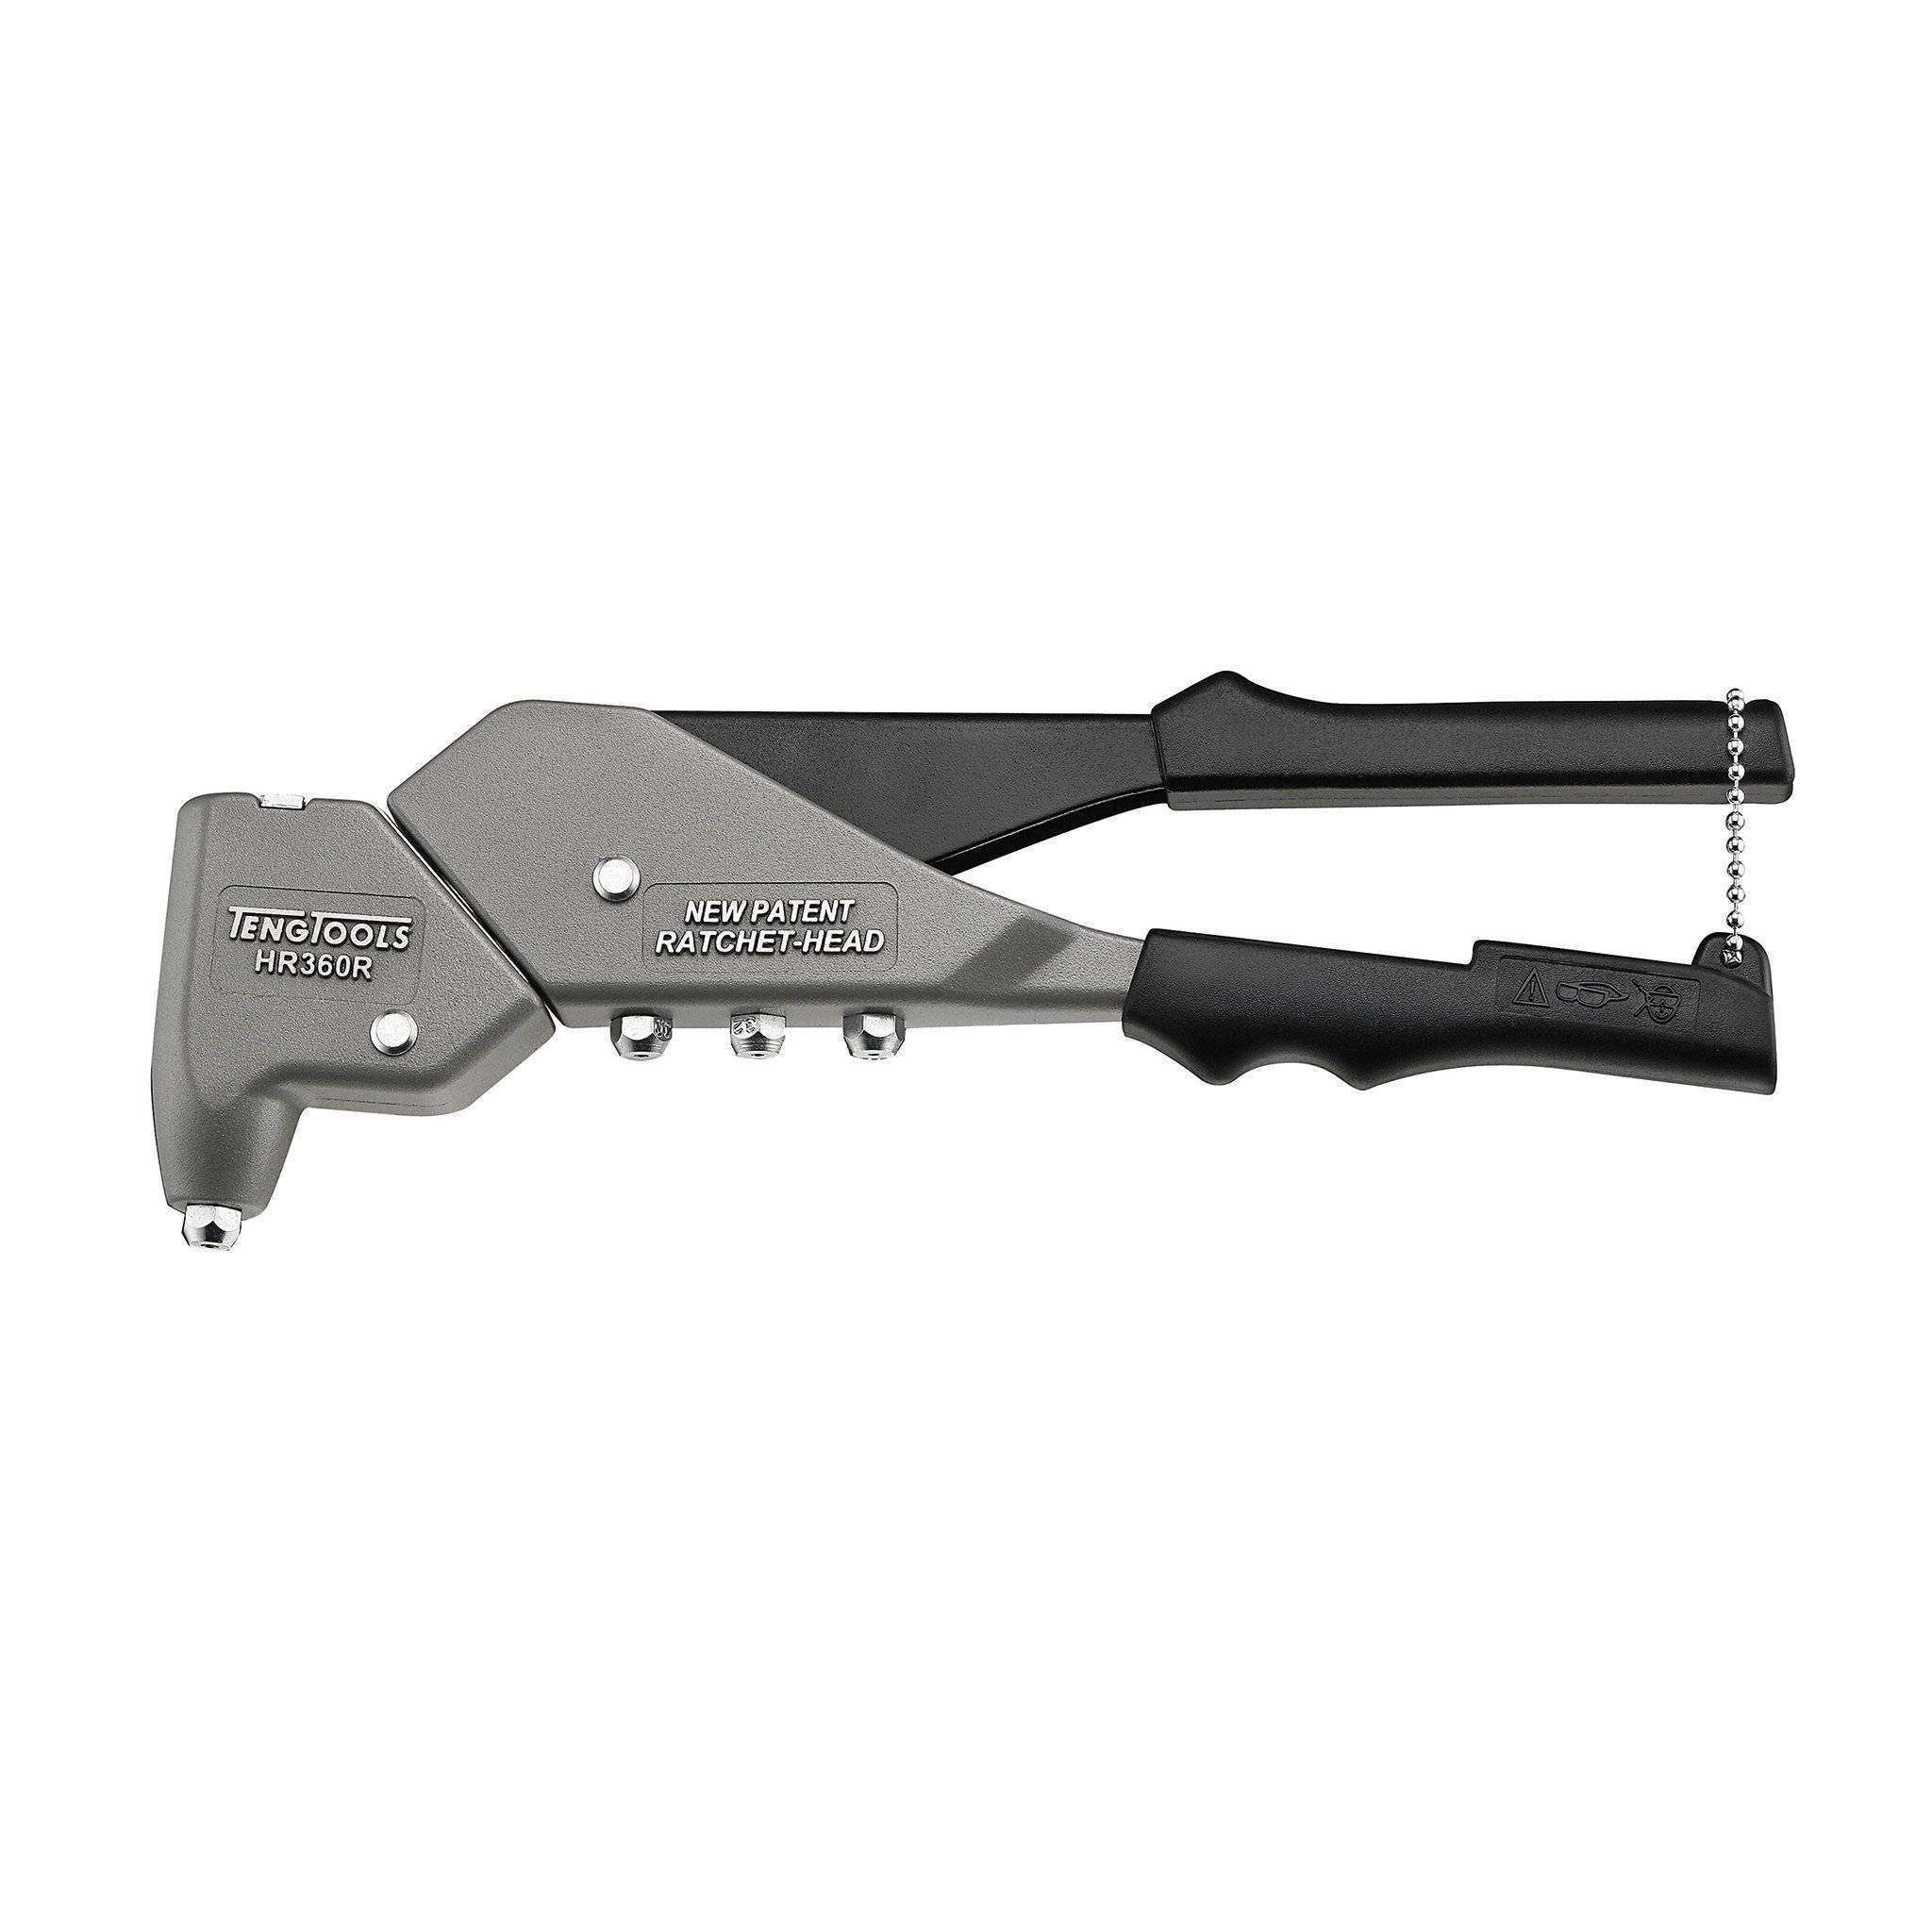 Teng Tools Swivel Head Rivet Gun - HR360R